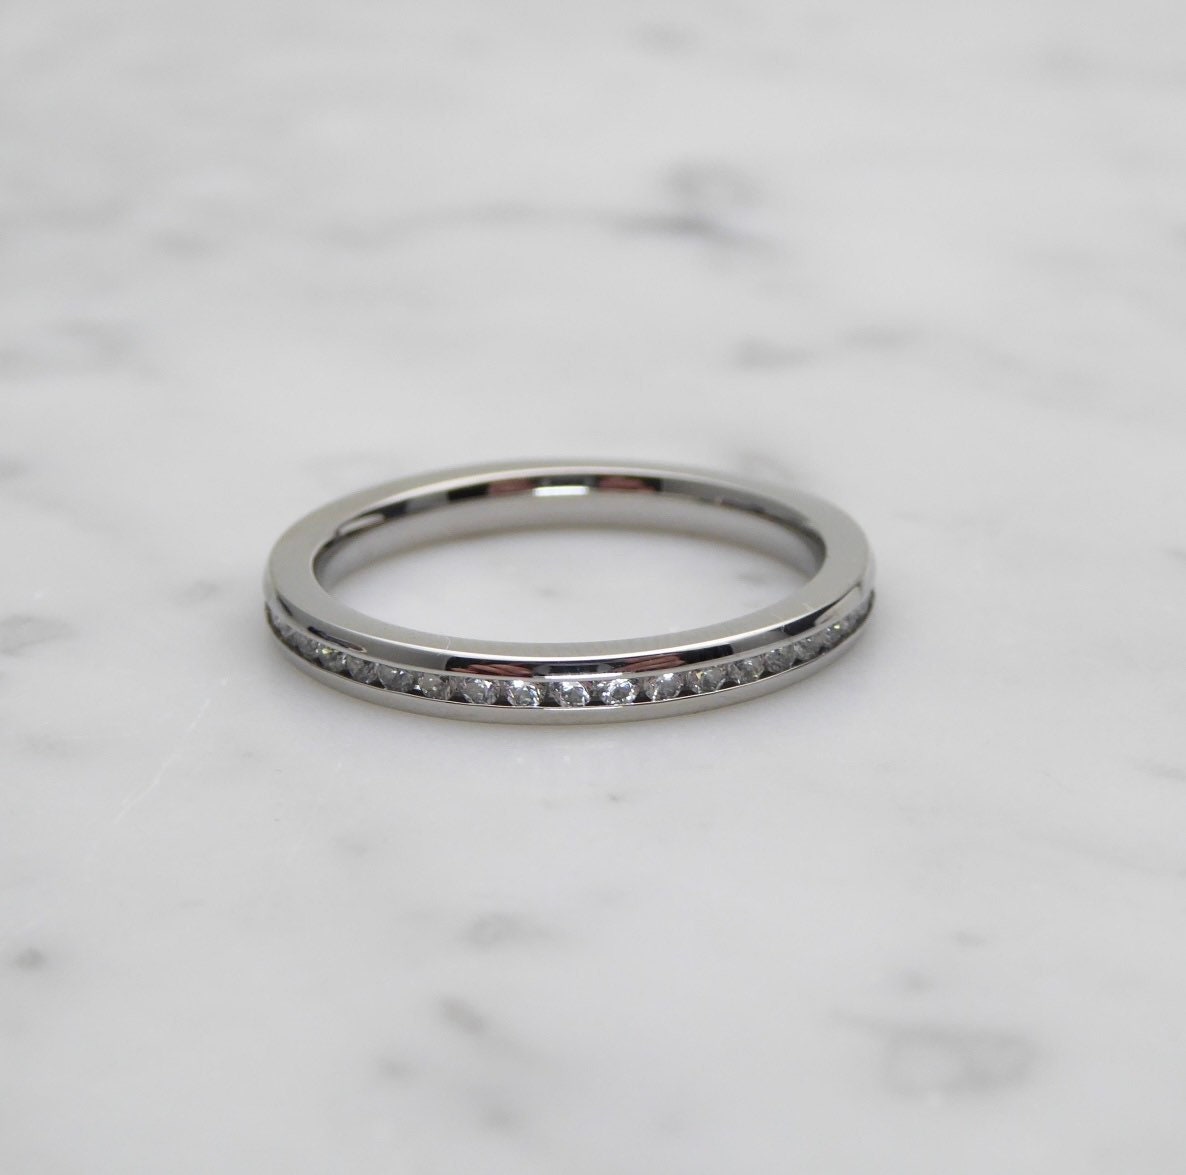 Genuine moissanite 2.5mm Wide Full Eternity ring in white gold filled or titanium - Wedding Band - Engagement ring